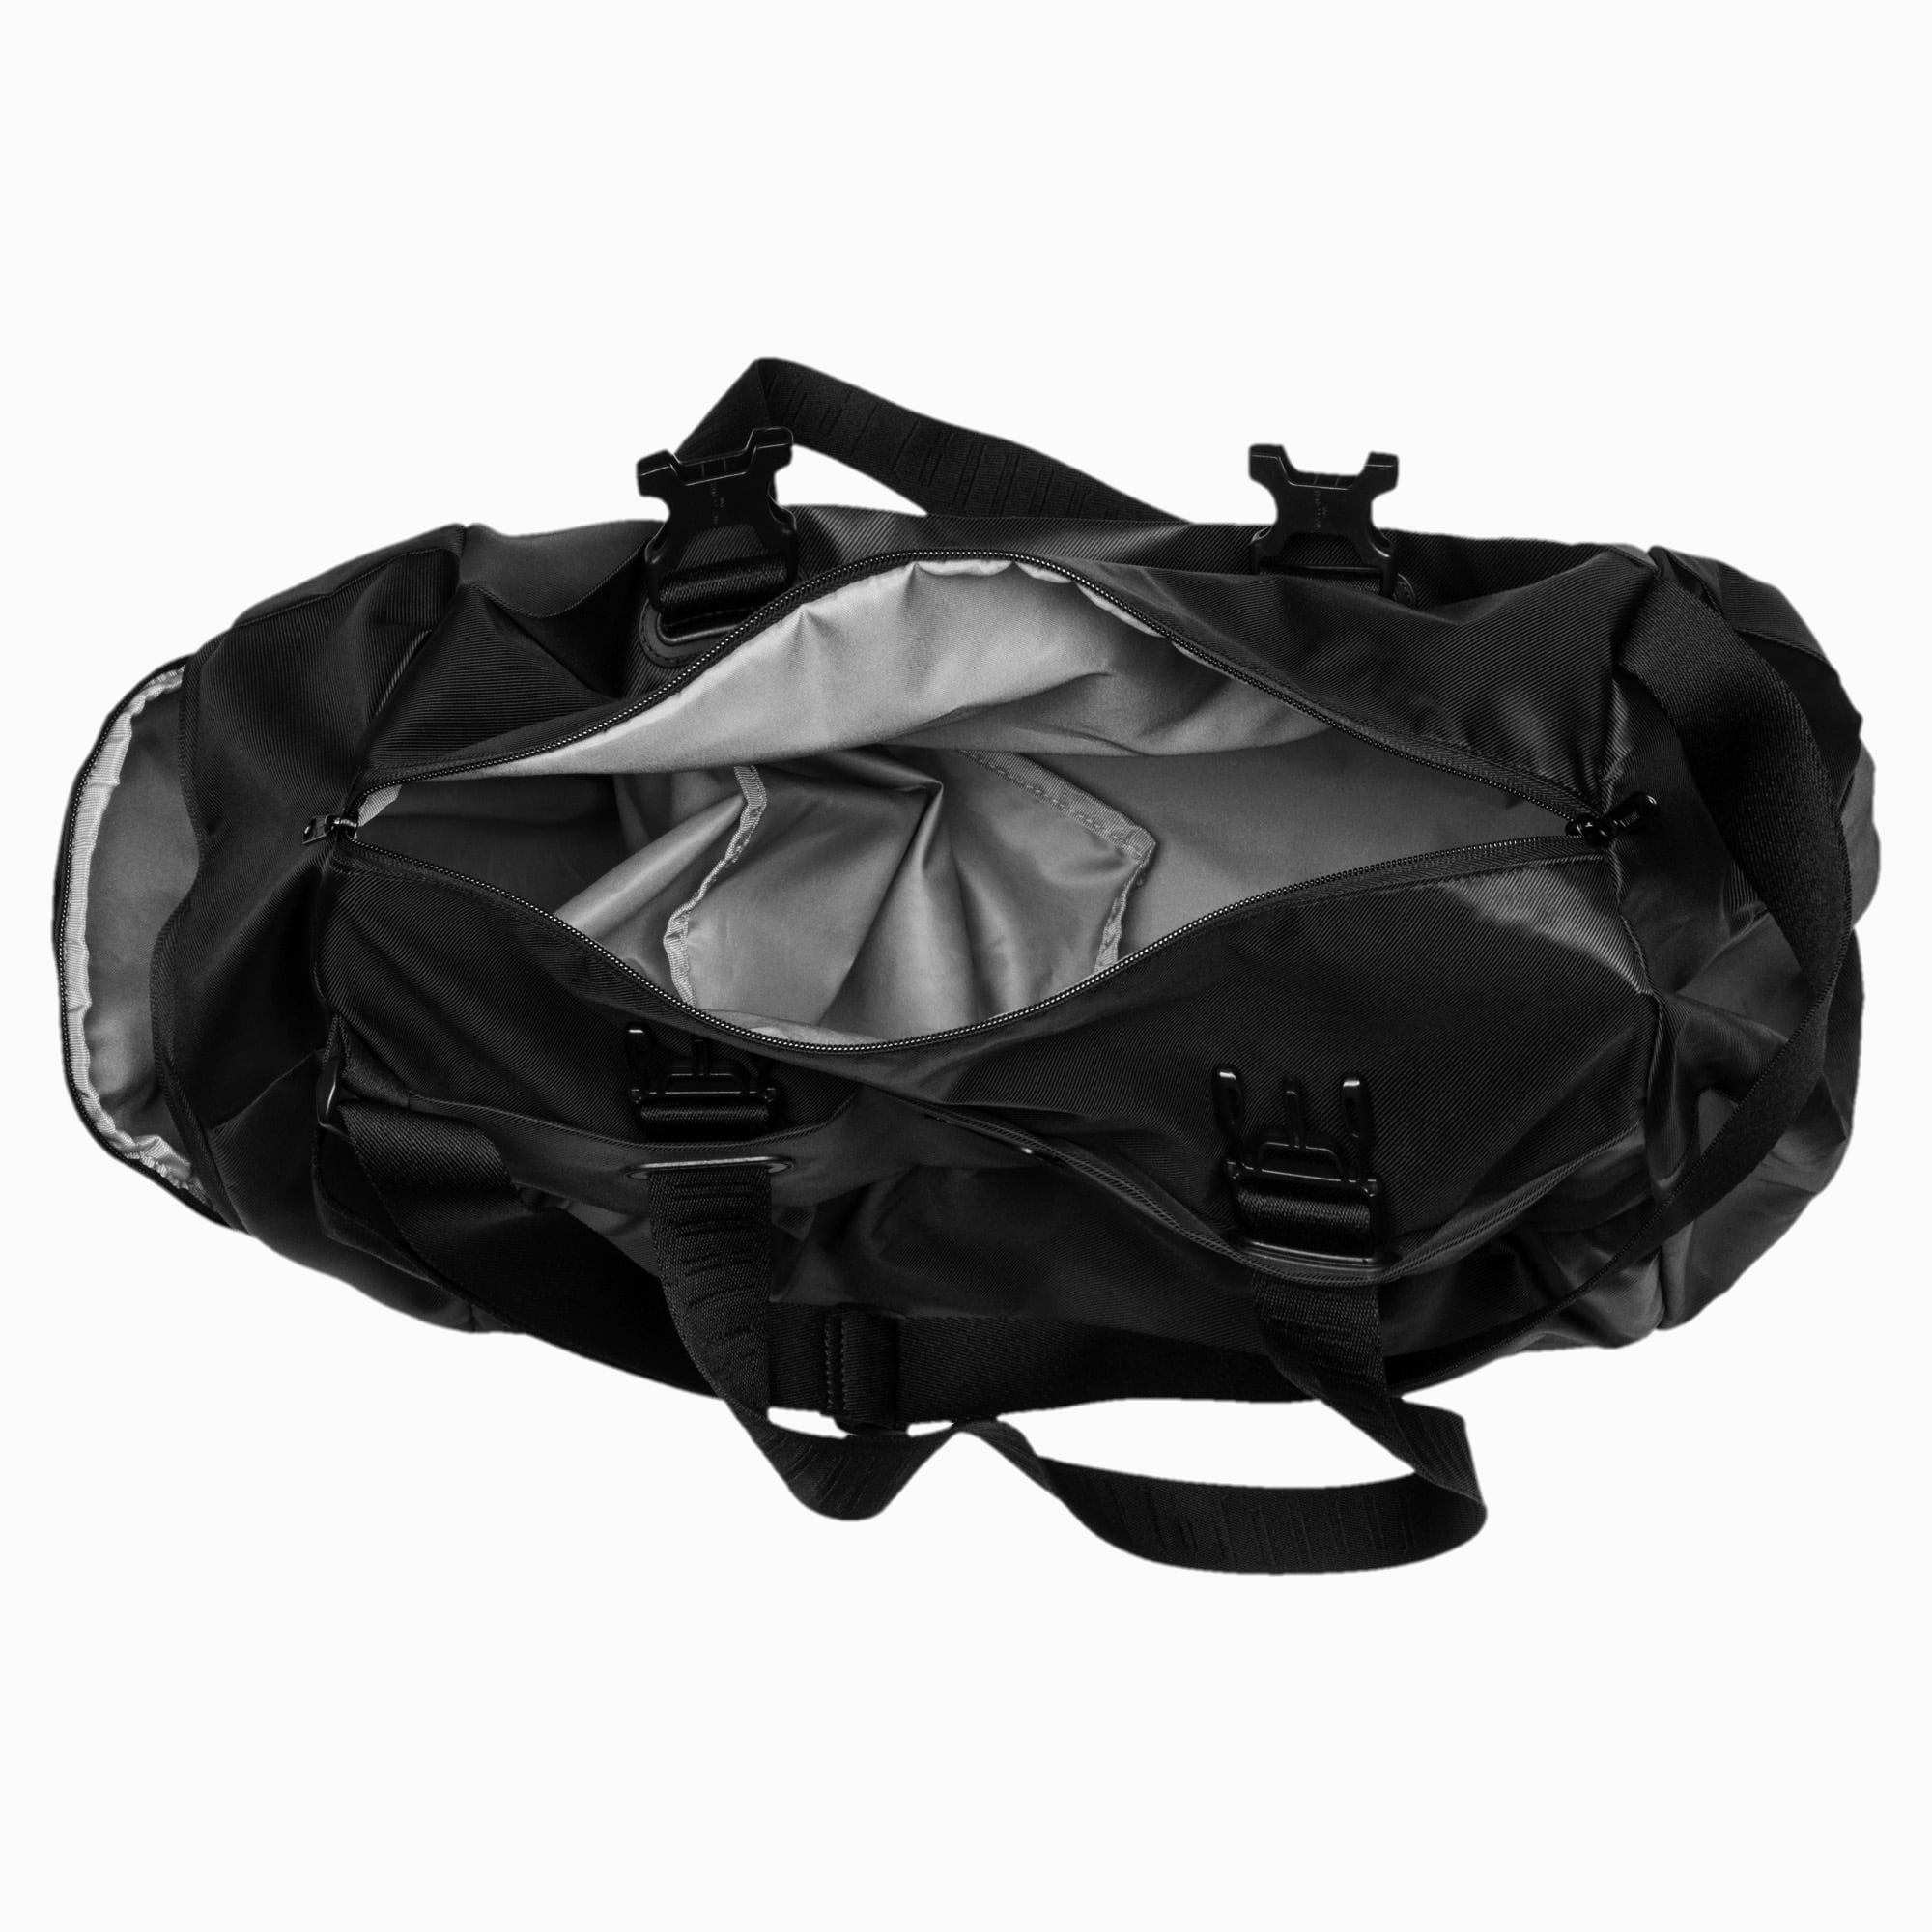 DSW Puma Black Duffel Duffle Sports Bag Workout Yoga Matt